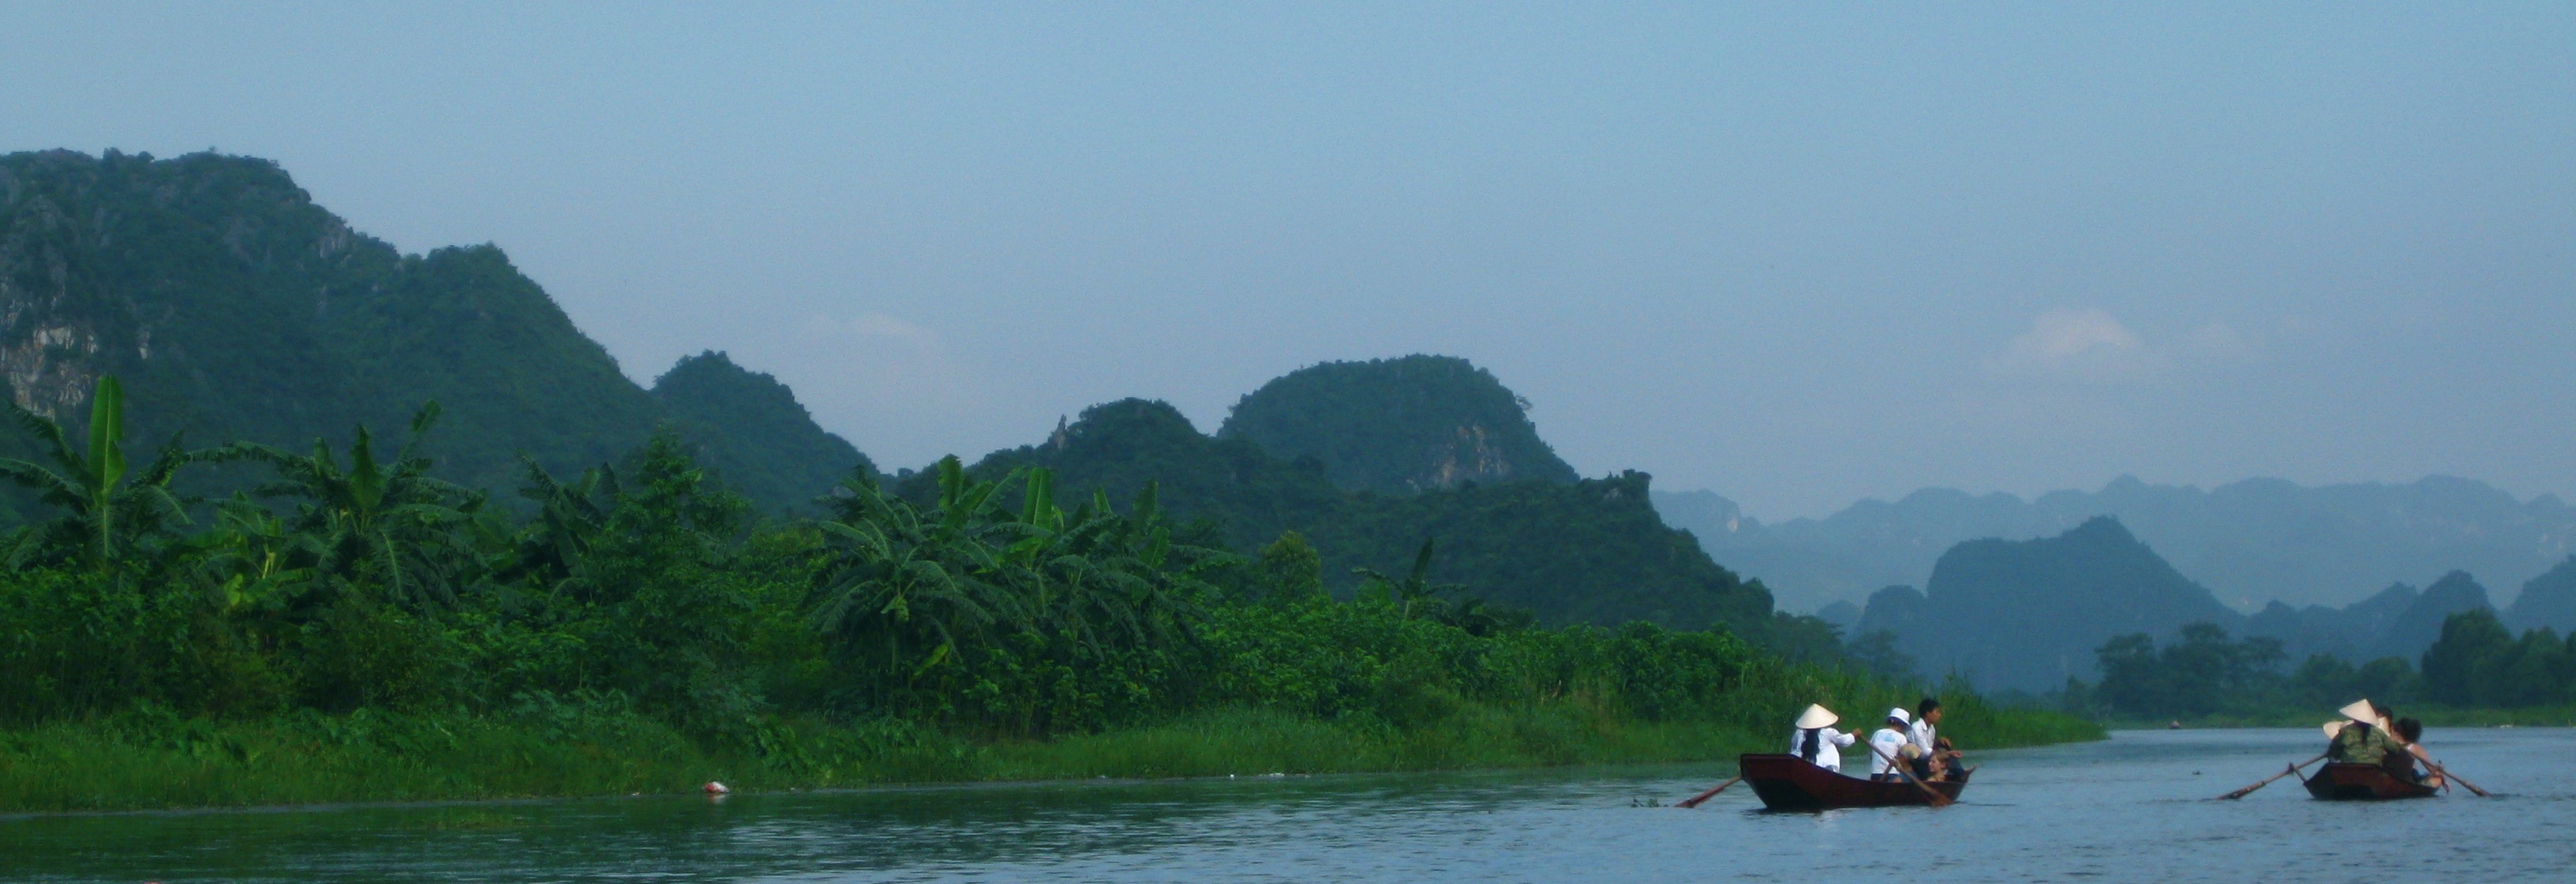 Boats on the Perfume River, Ha Tay Province